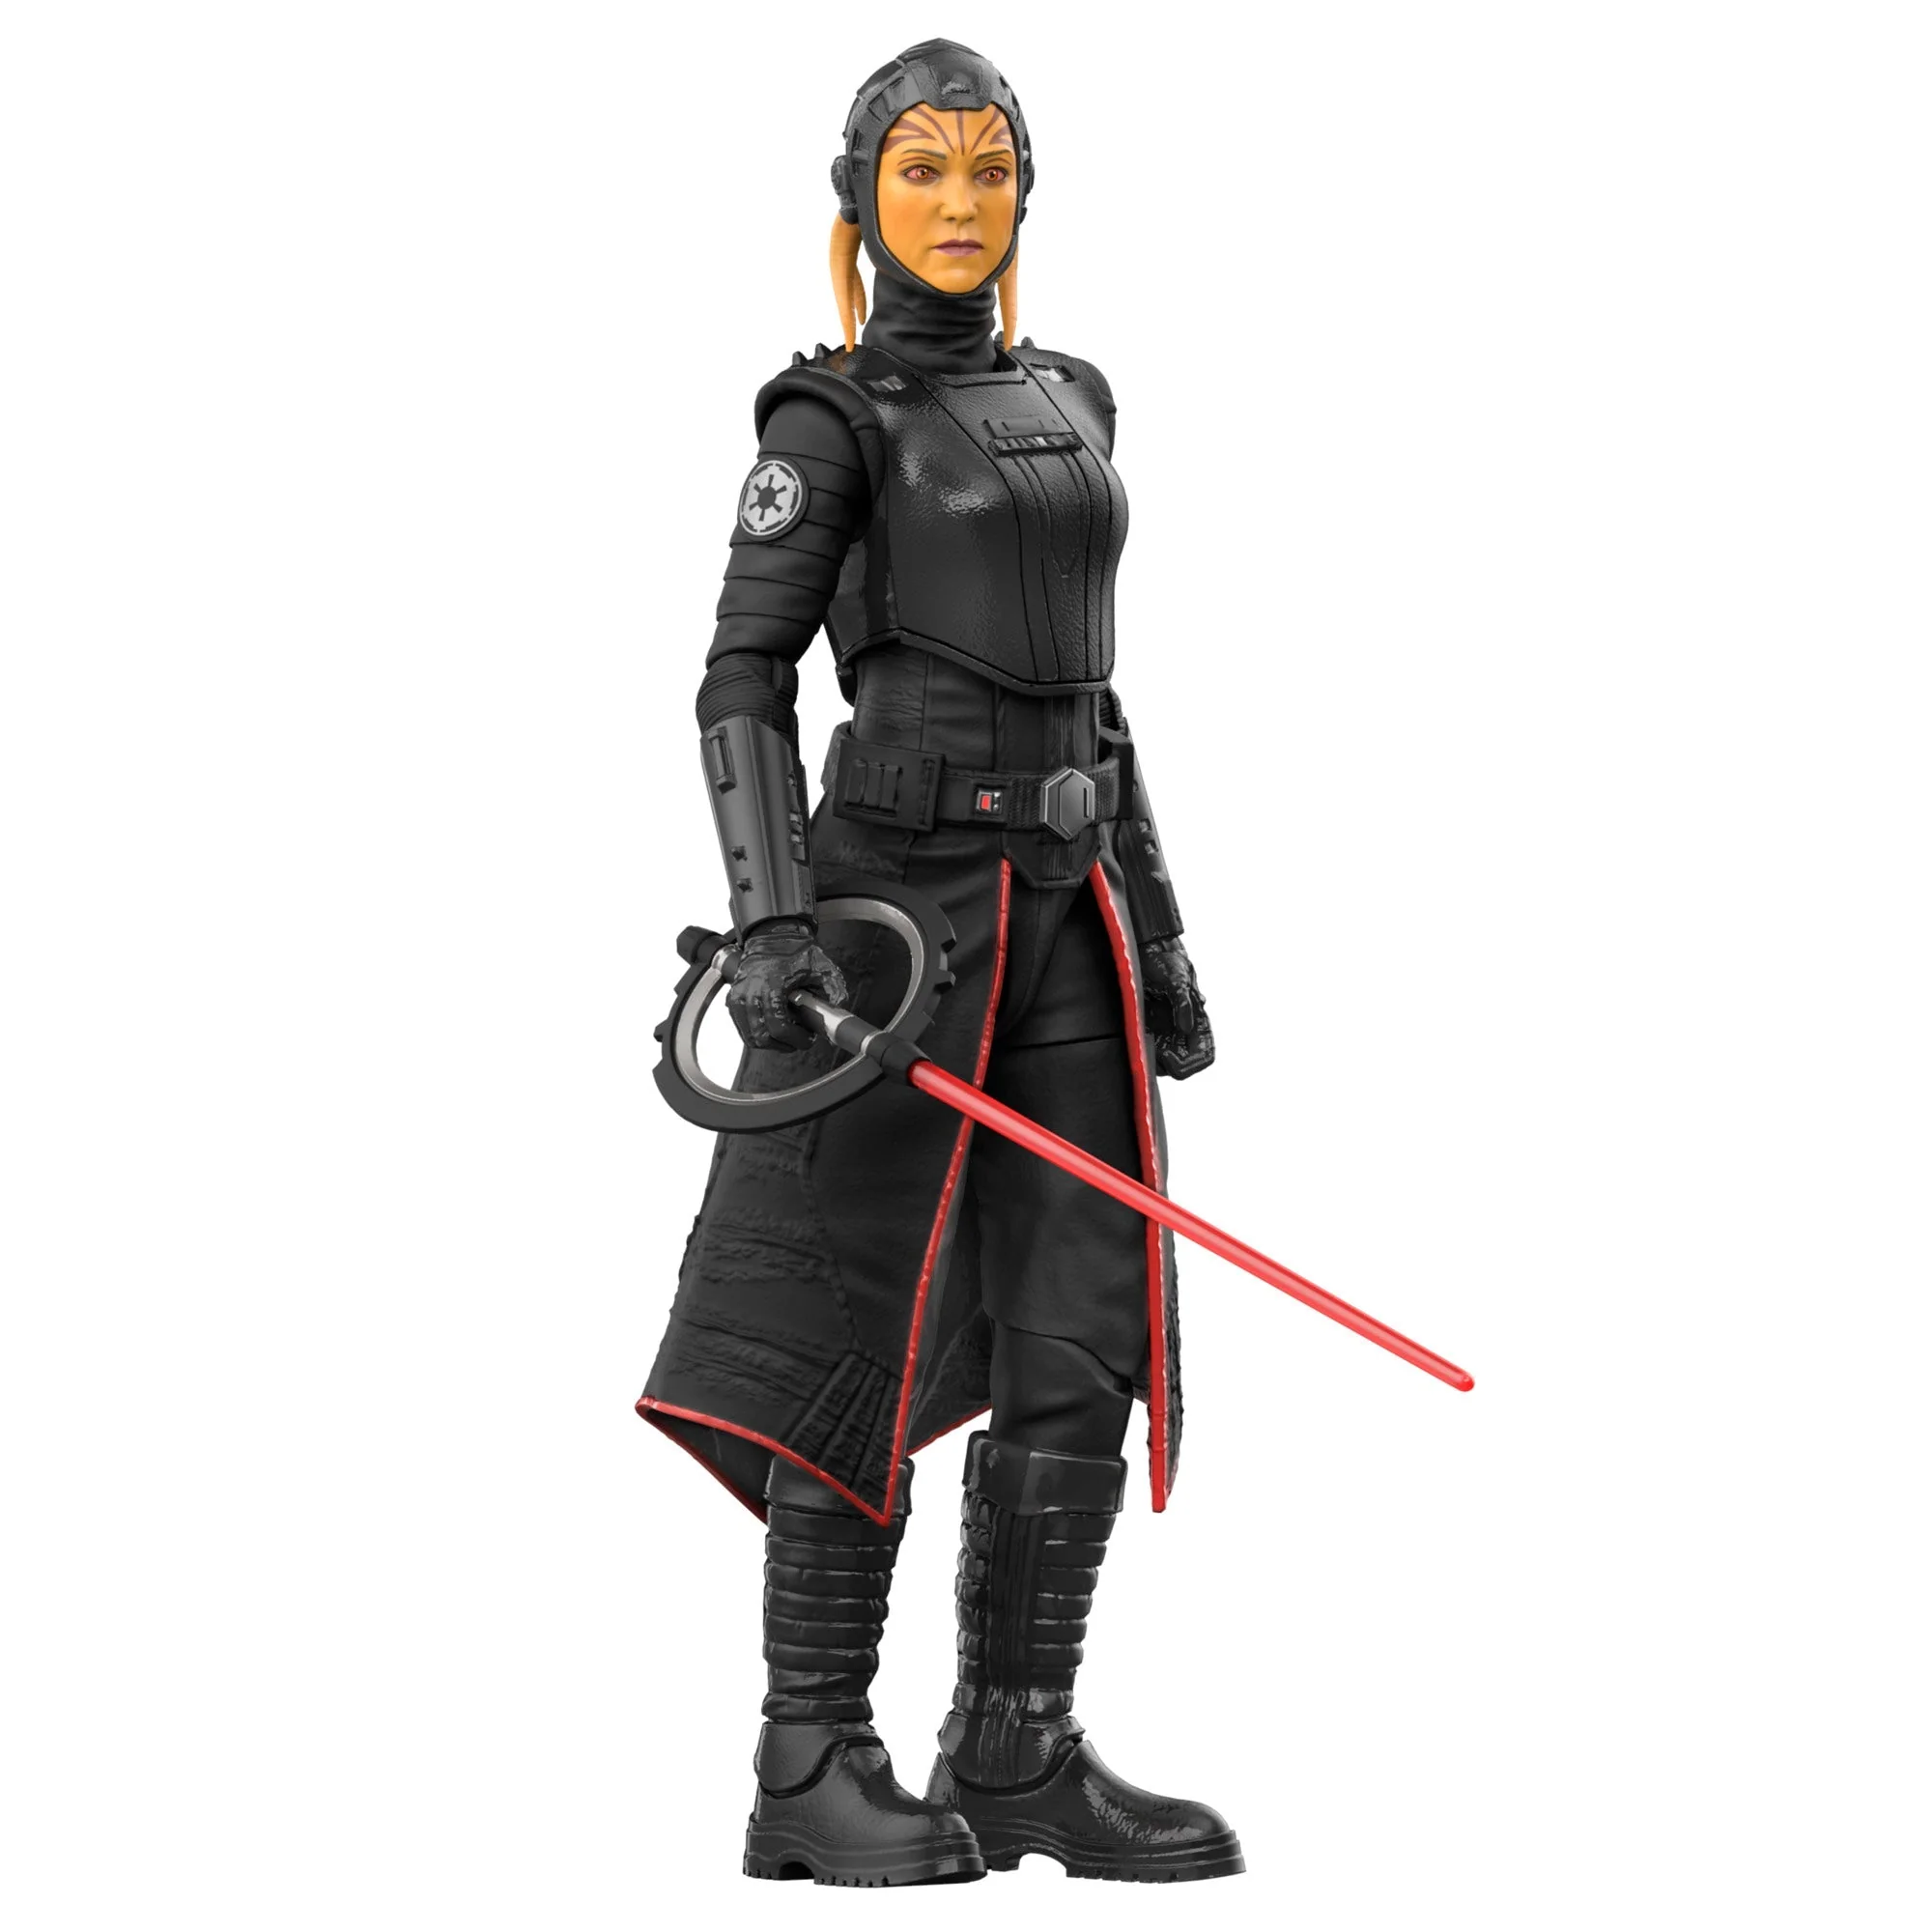 Inquisitore-quarta sorella-figurina-Star-Wars-Obi-Wan-Kenobi-serie nera-Hasbro-15-cm-5010996124845-regno-figurina-6